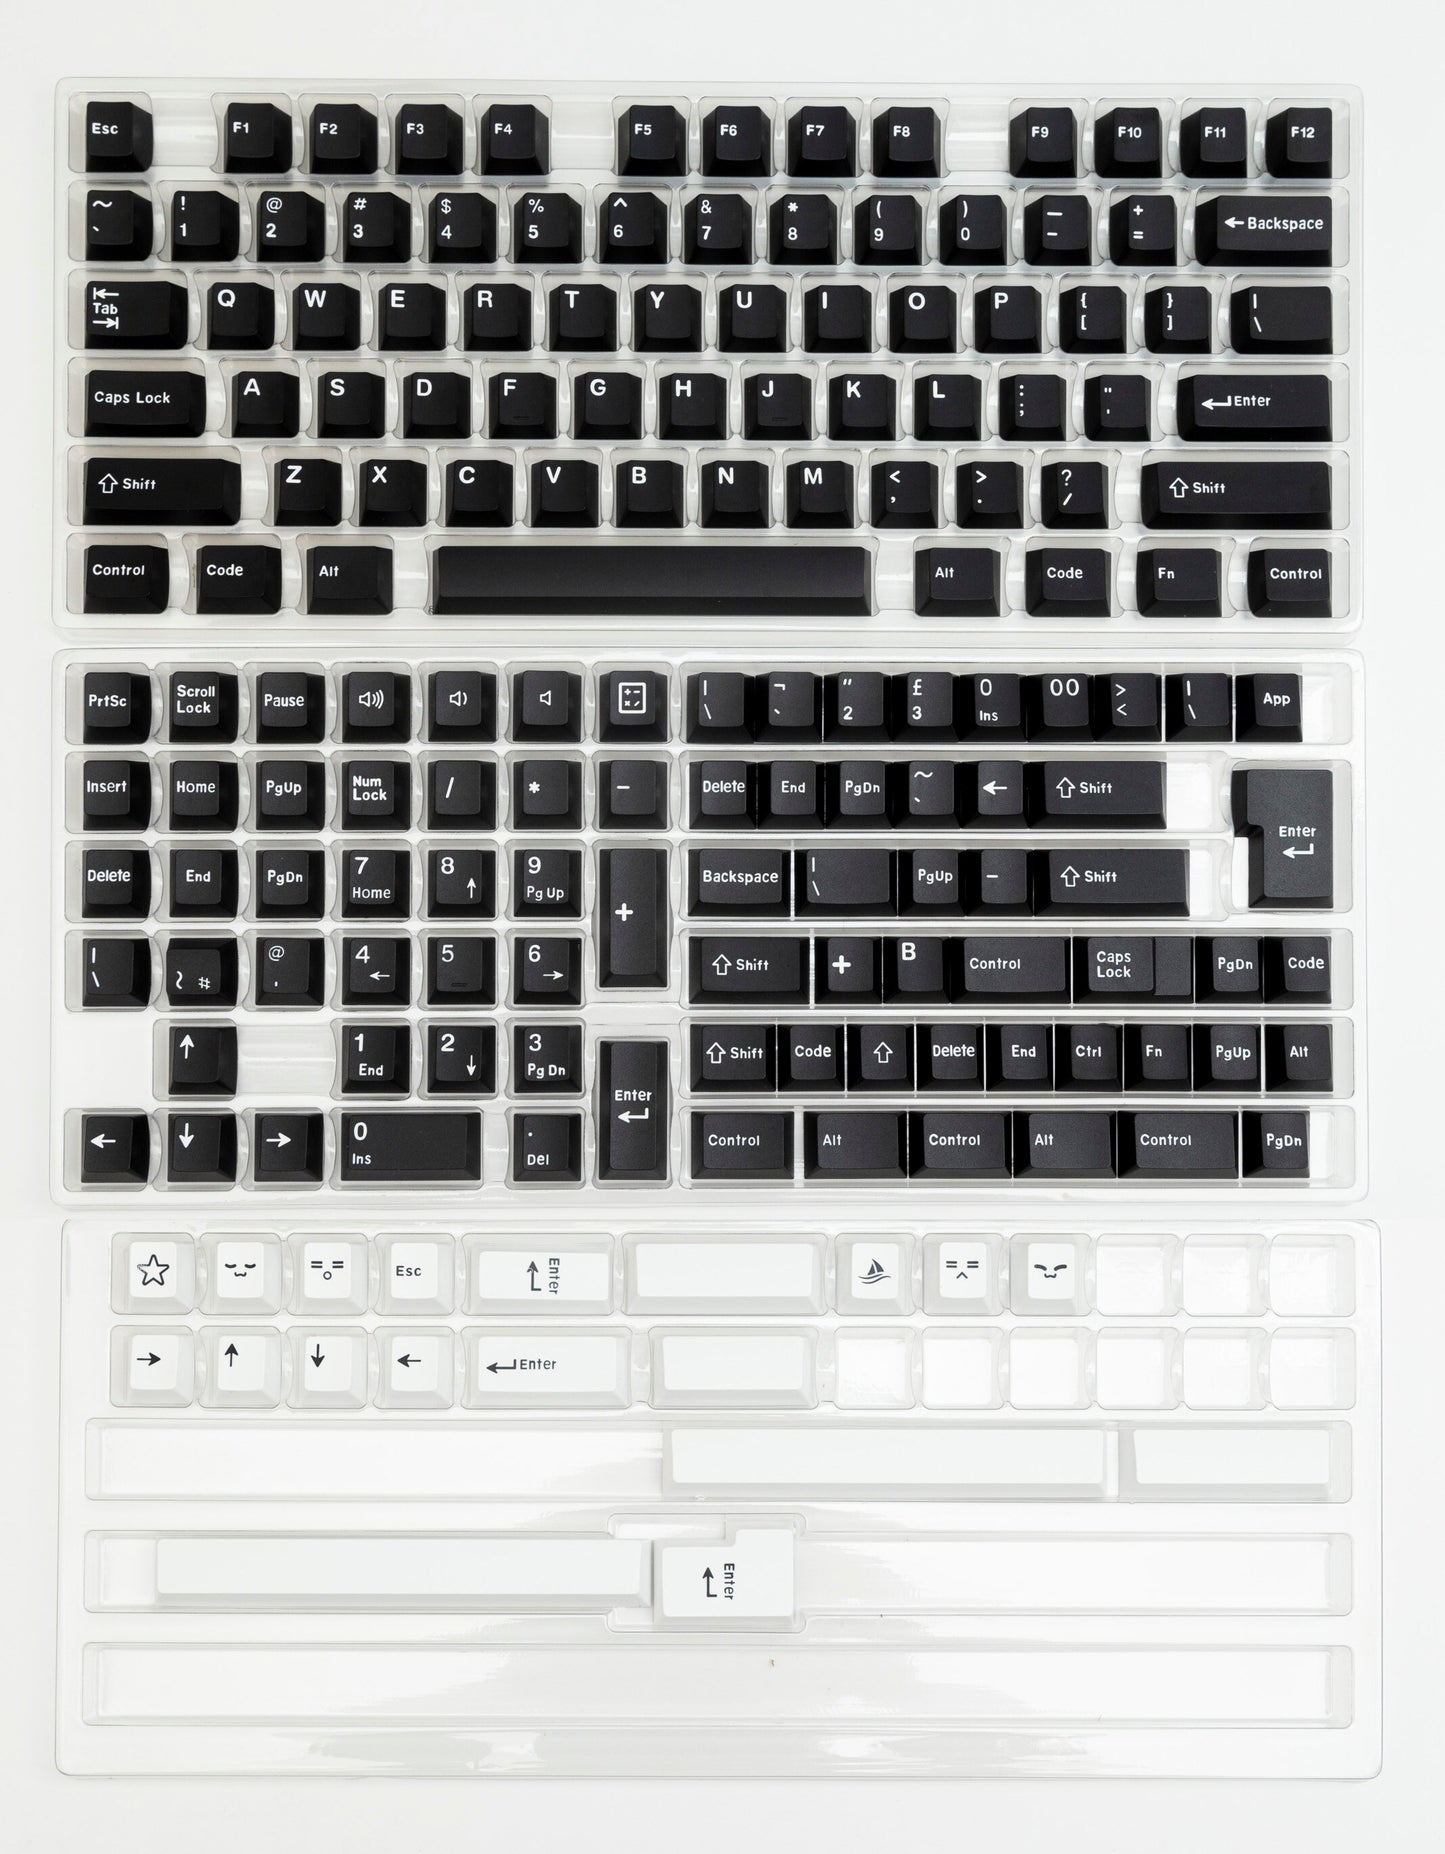 173 Key Doubleshot PBT Cherry Profile Keycap Set - Black & White